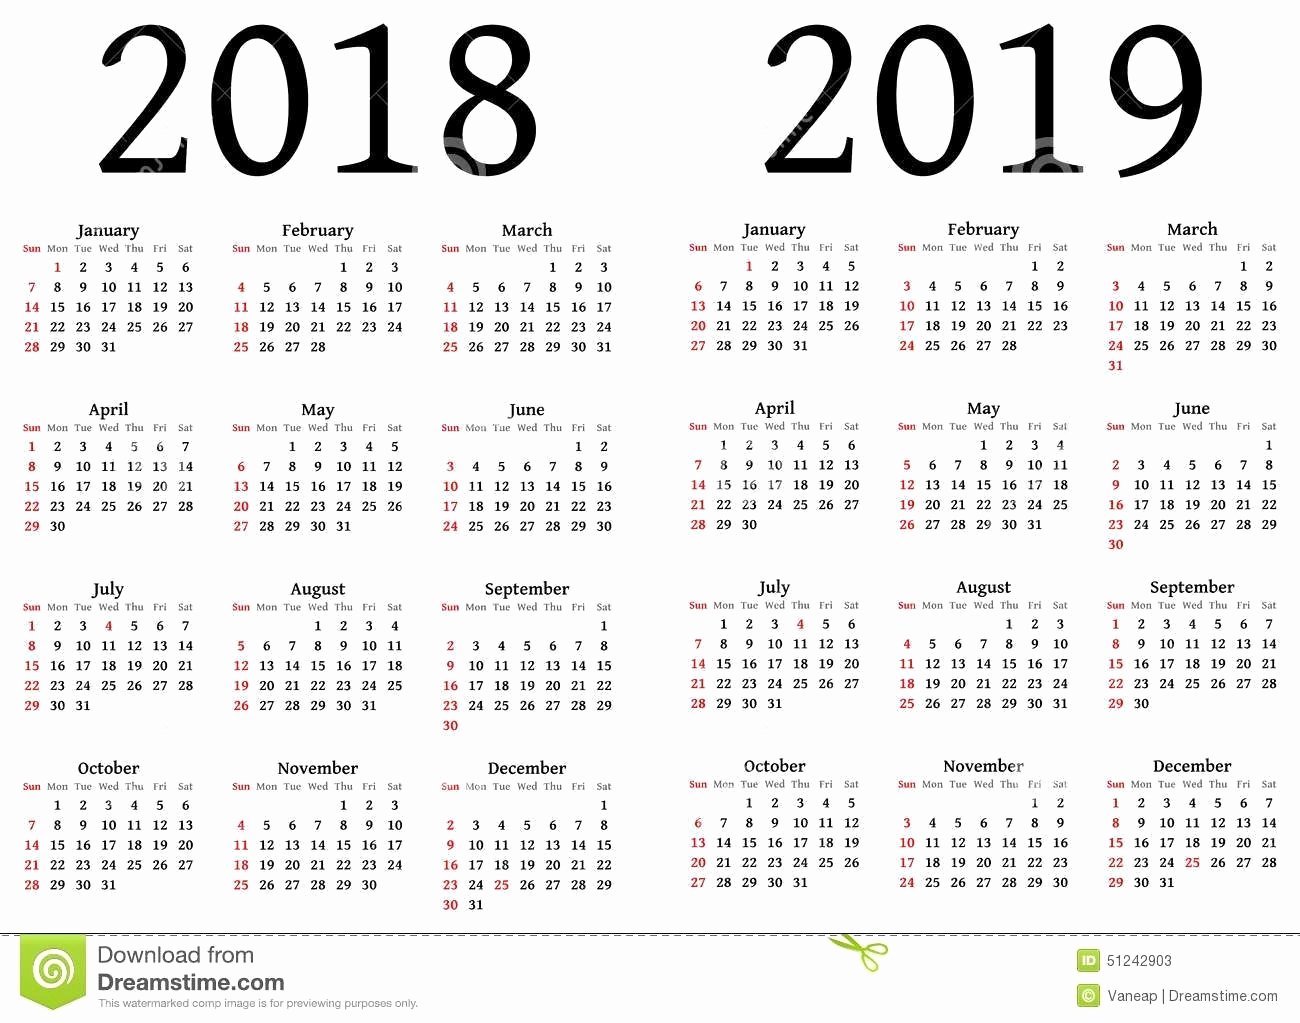 Payroll Calendar Template 2019 Awesome Biweekly Payroll Calendar Template 2019